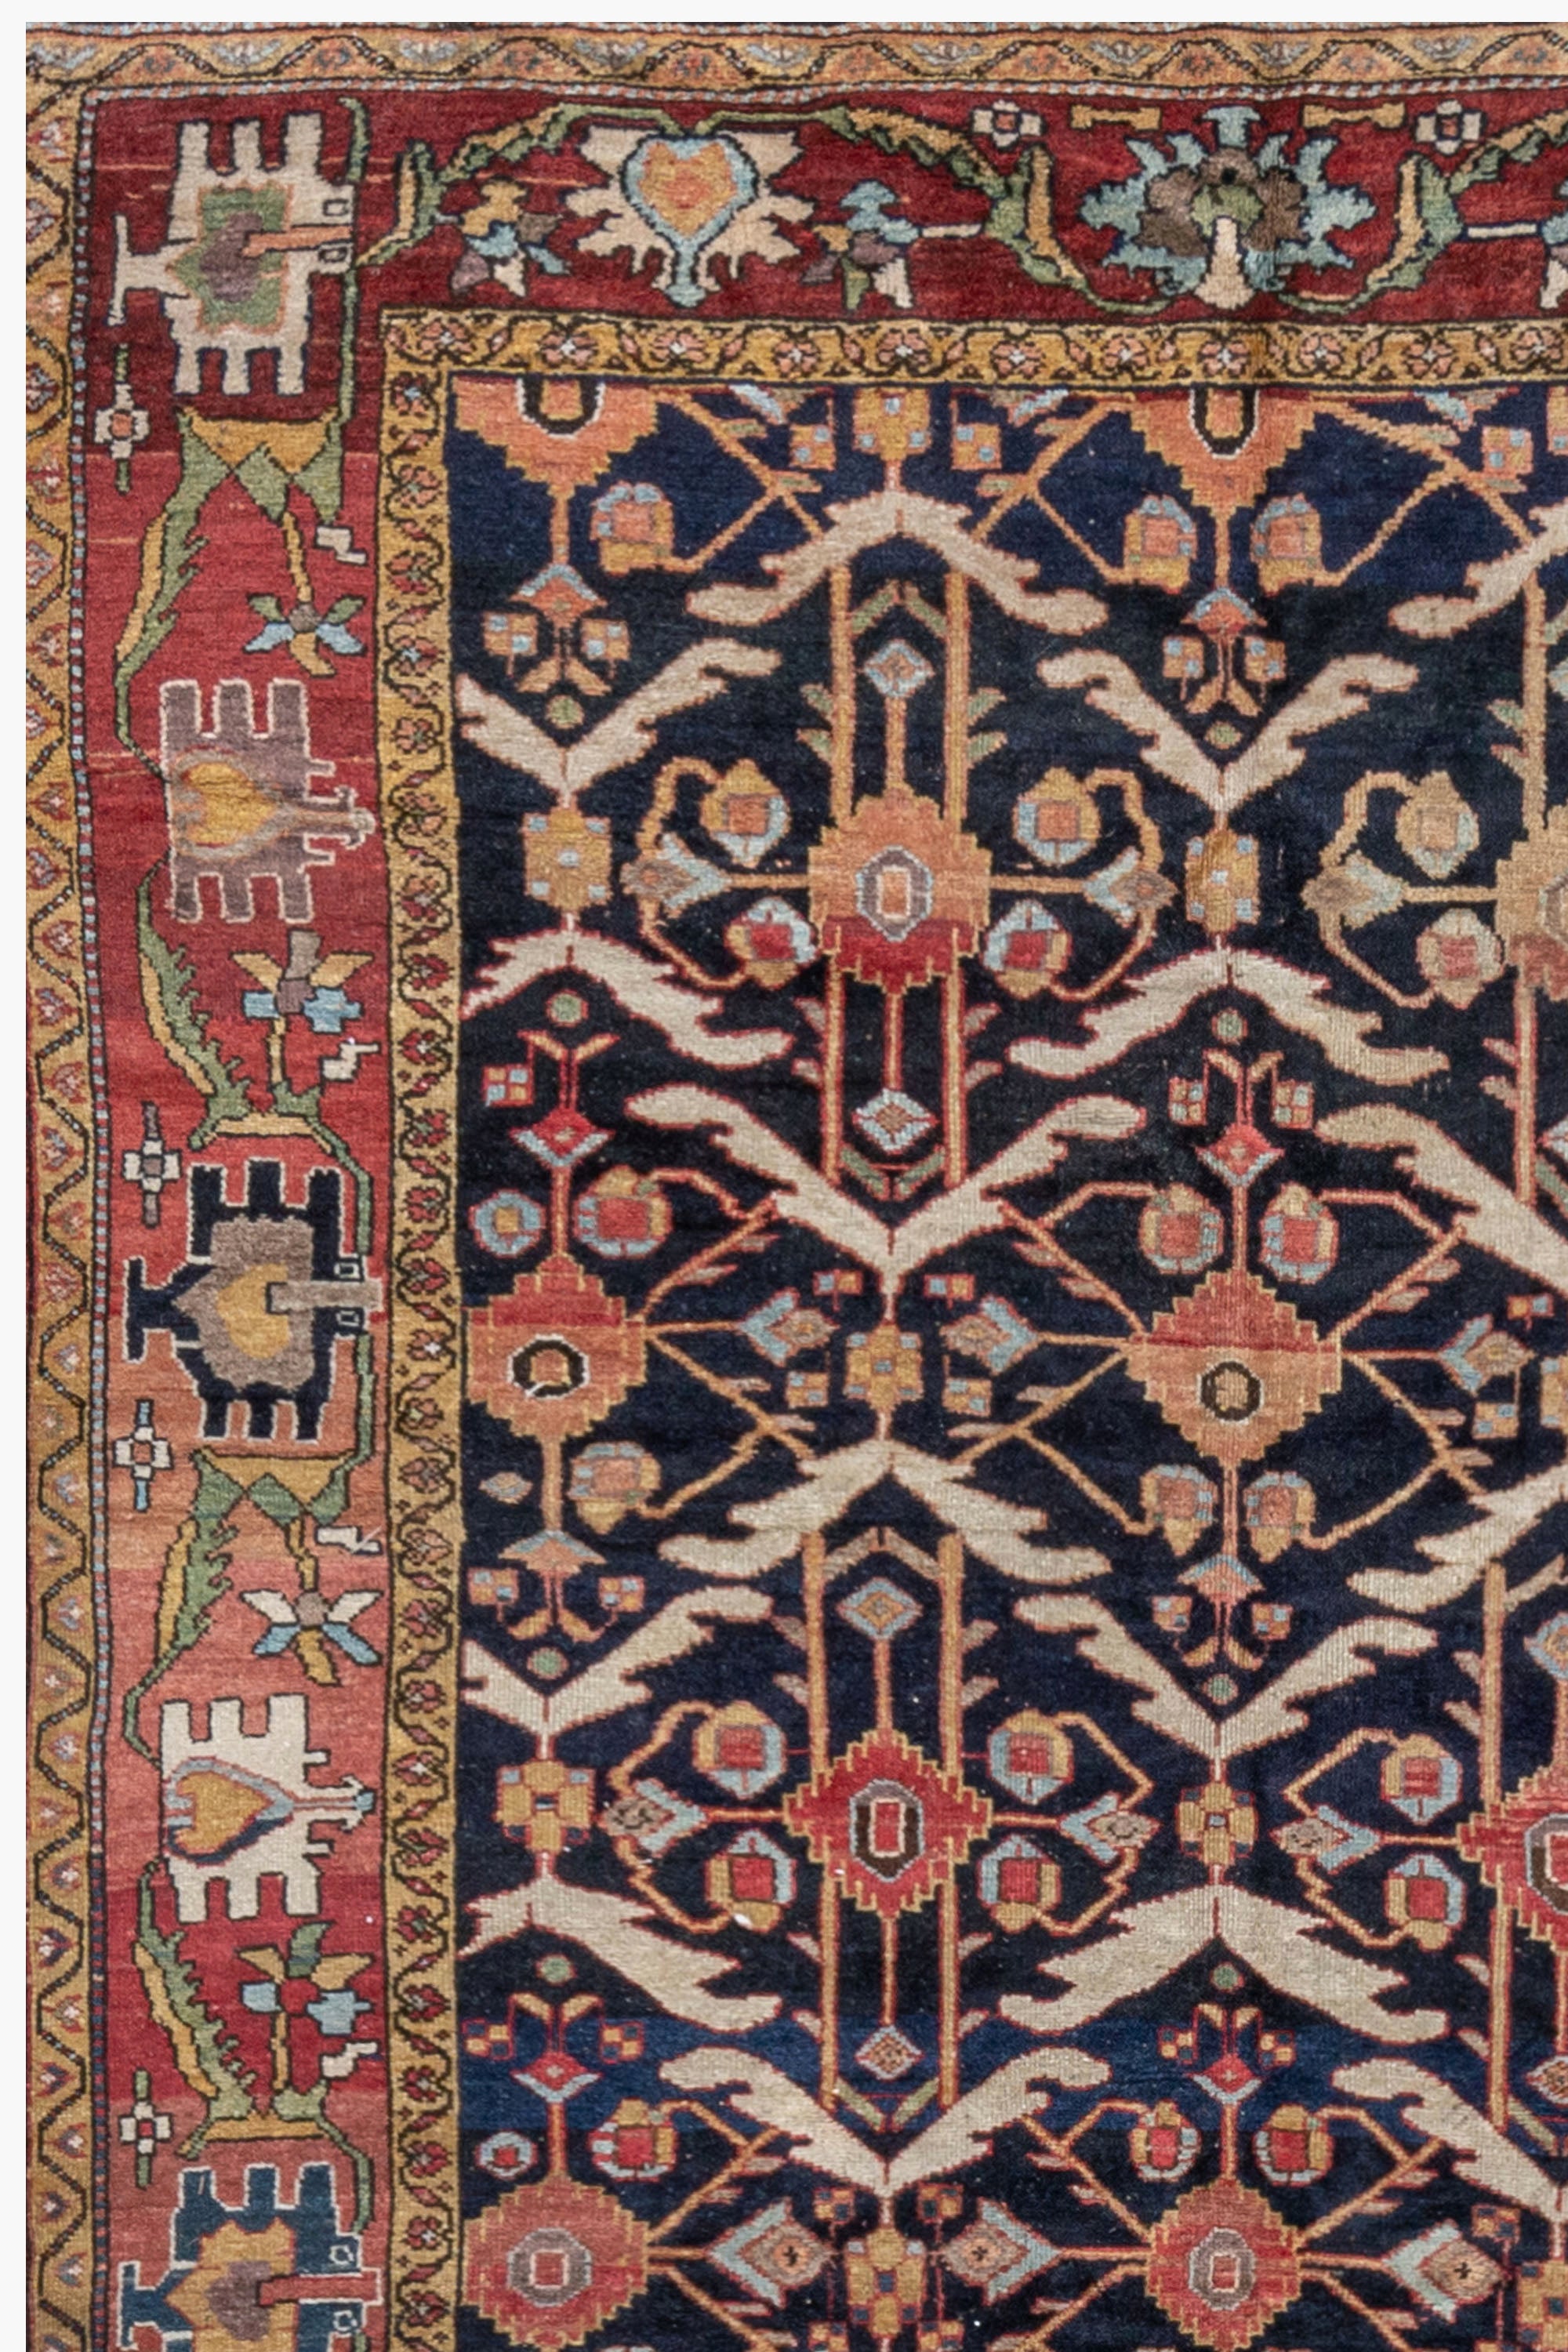 Kurdish rug, AR31280, WEST PERSIA, 6' 9" x 11' 3" - thumbnail 2